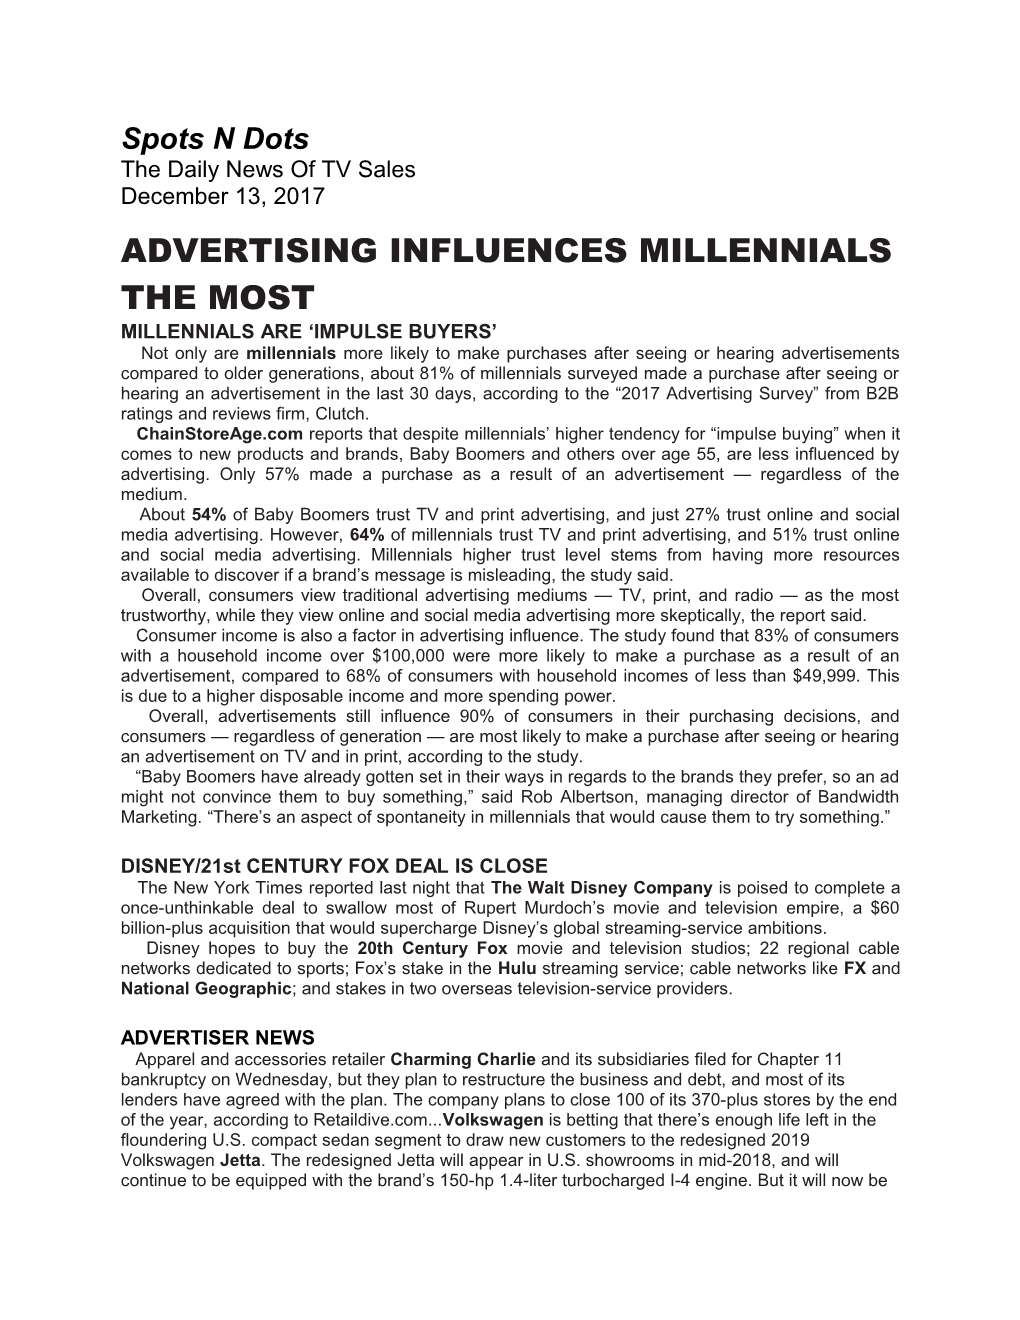 Advertising Influences Millennials the Most